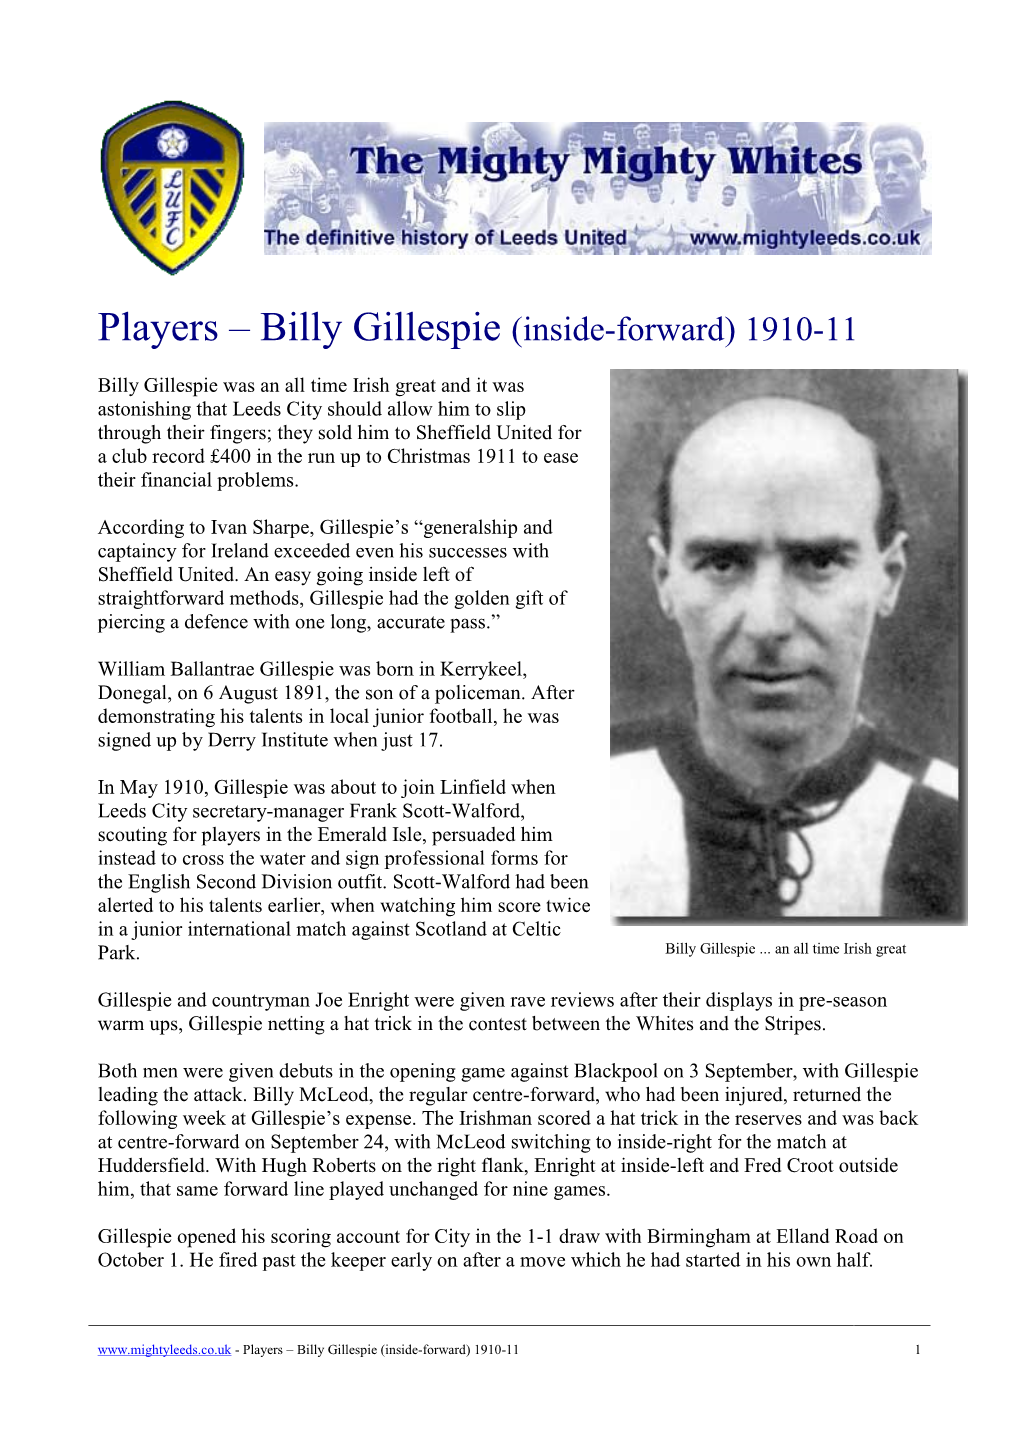 Players – Billy Gillespie (Inside-Forward) 1910-11